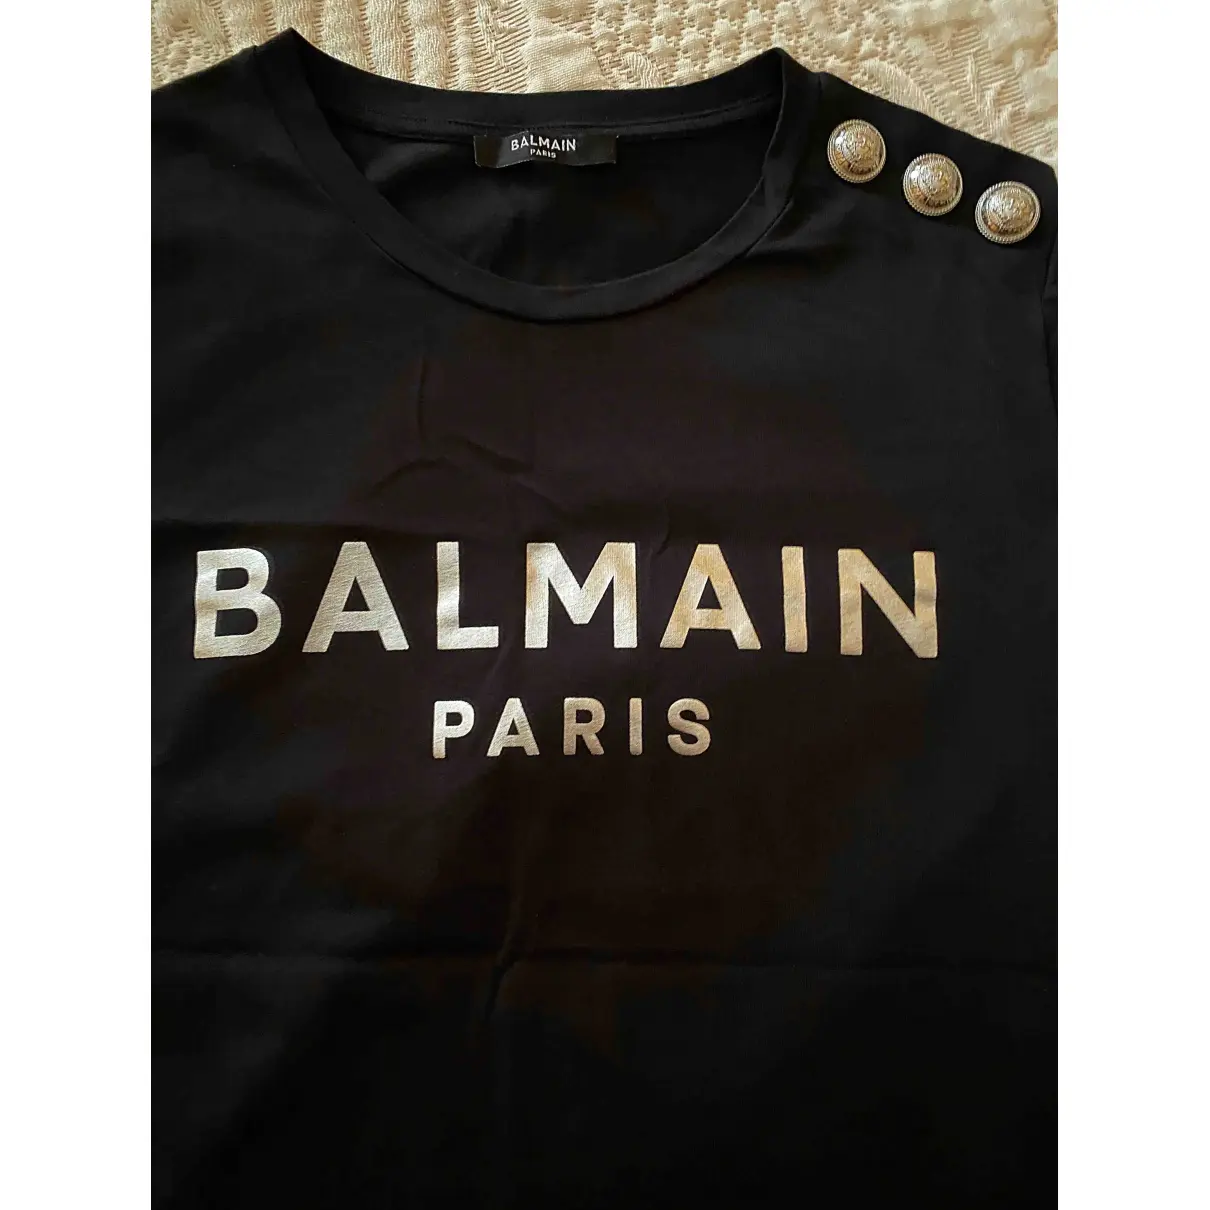 Buy Balmain Black Cotton Top online